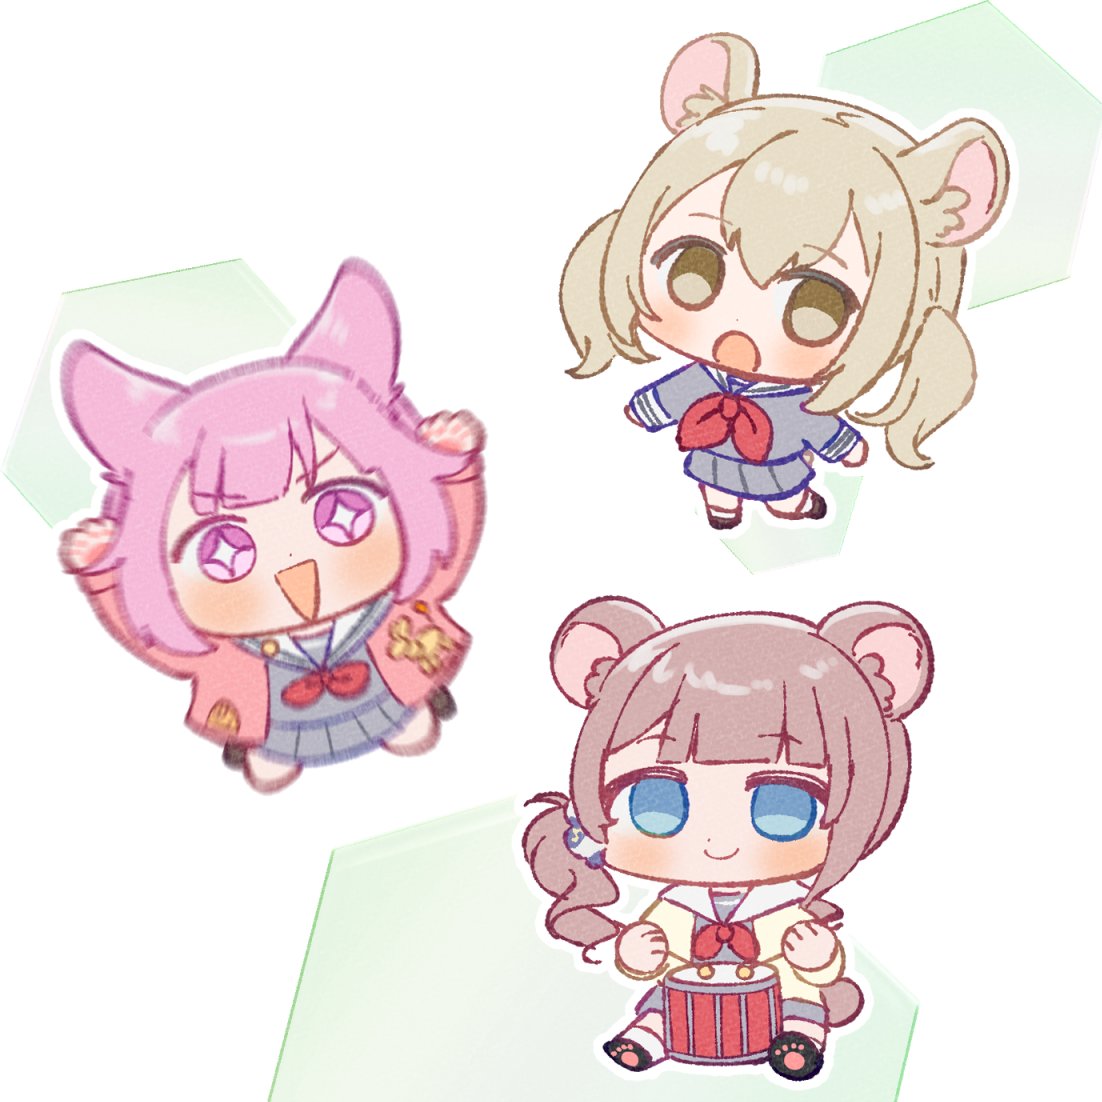 multiple girls animal ears 3girls school uniform mouse ears chibi pink hair  illustration images